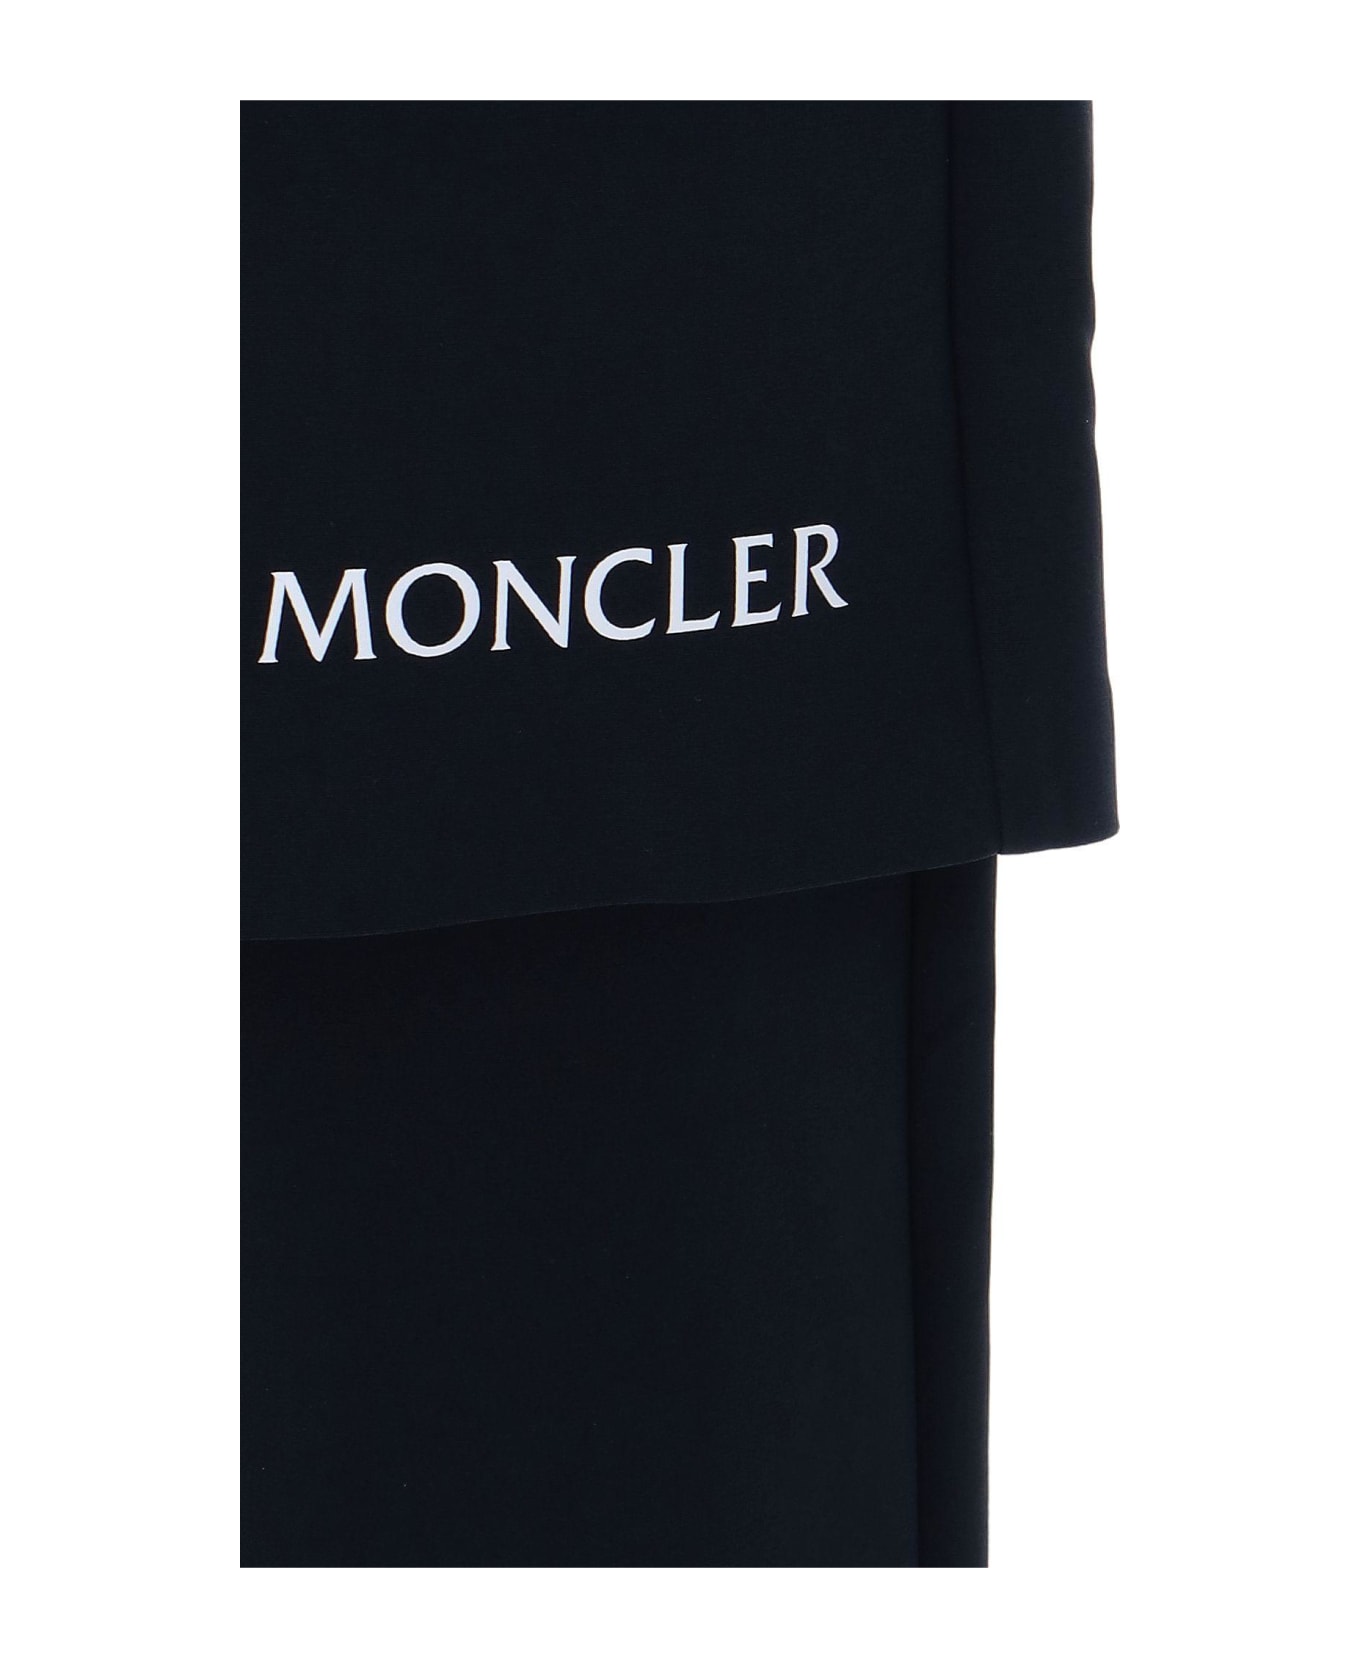 Moncler 'n° 4 Hyke' Logoed Waist Trousers - BLACK